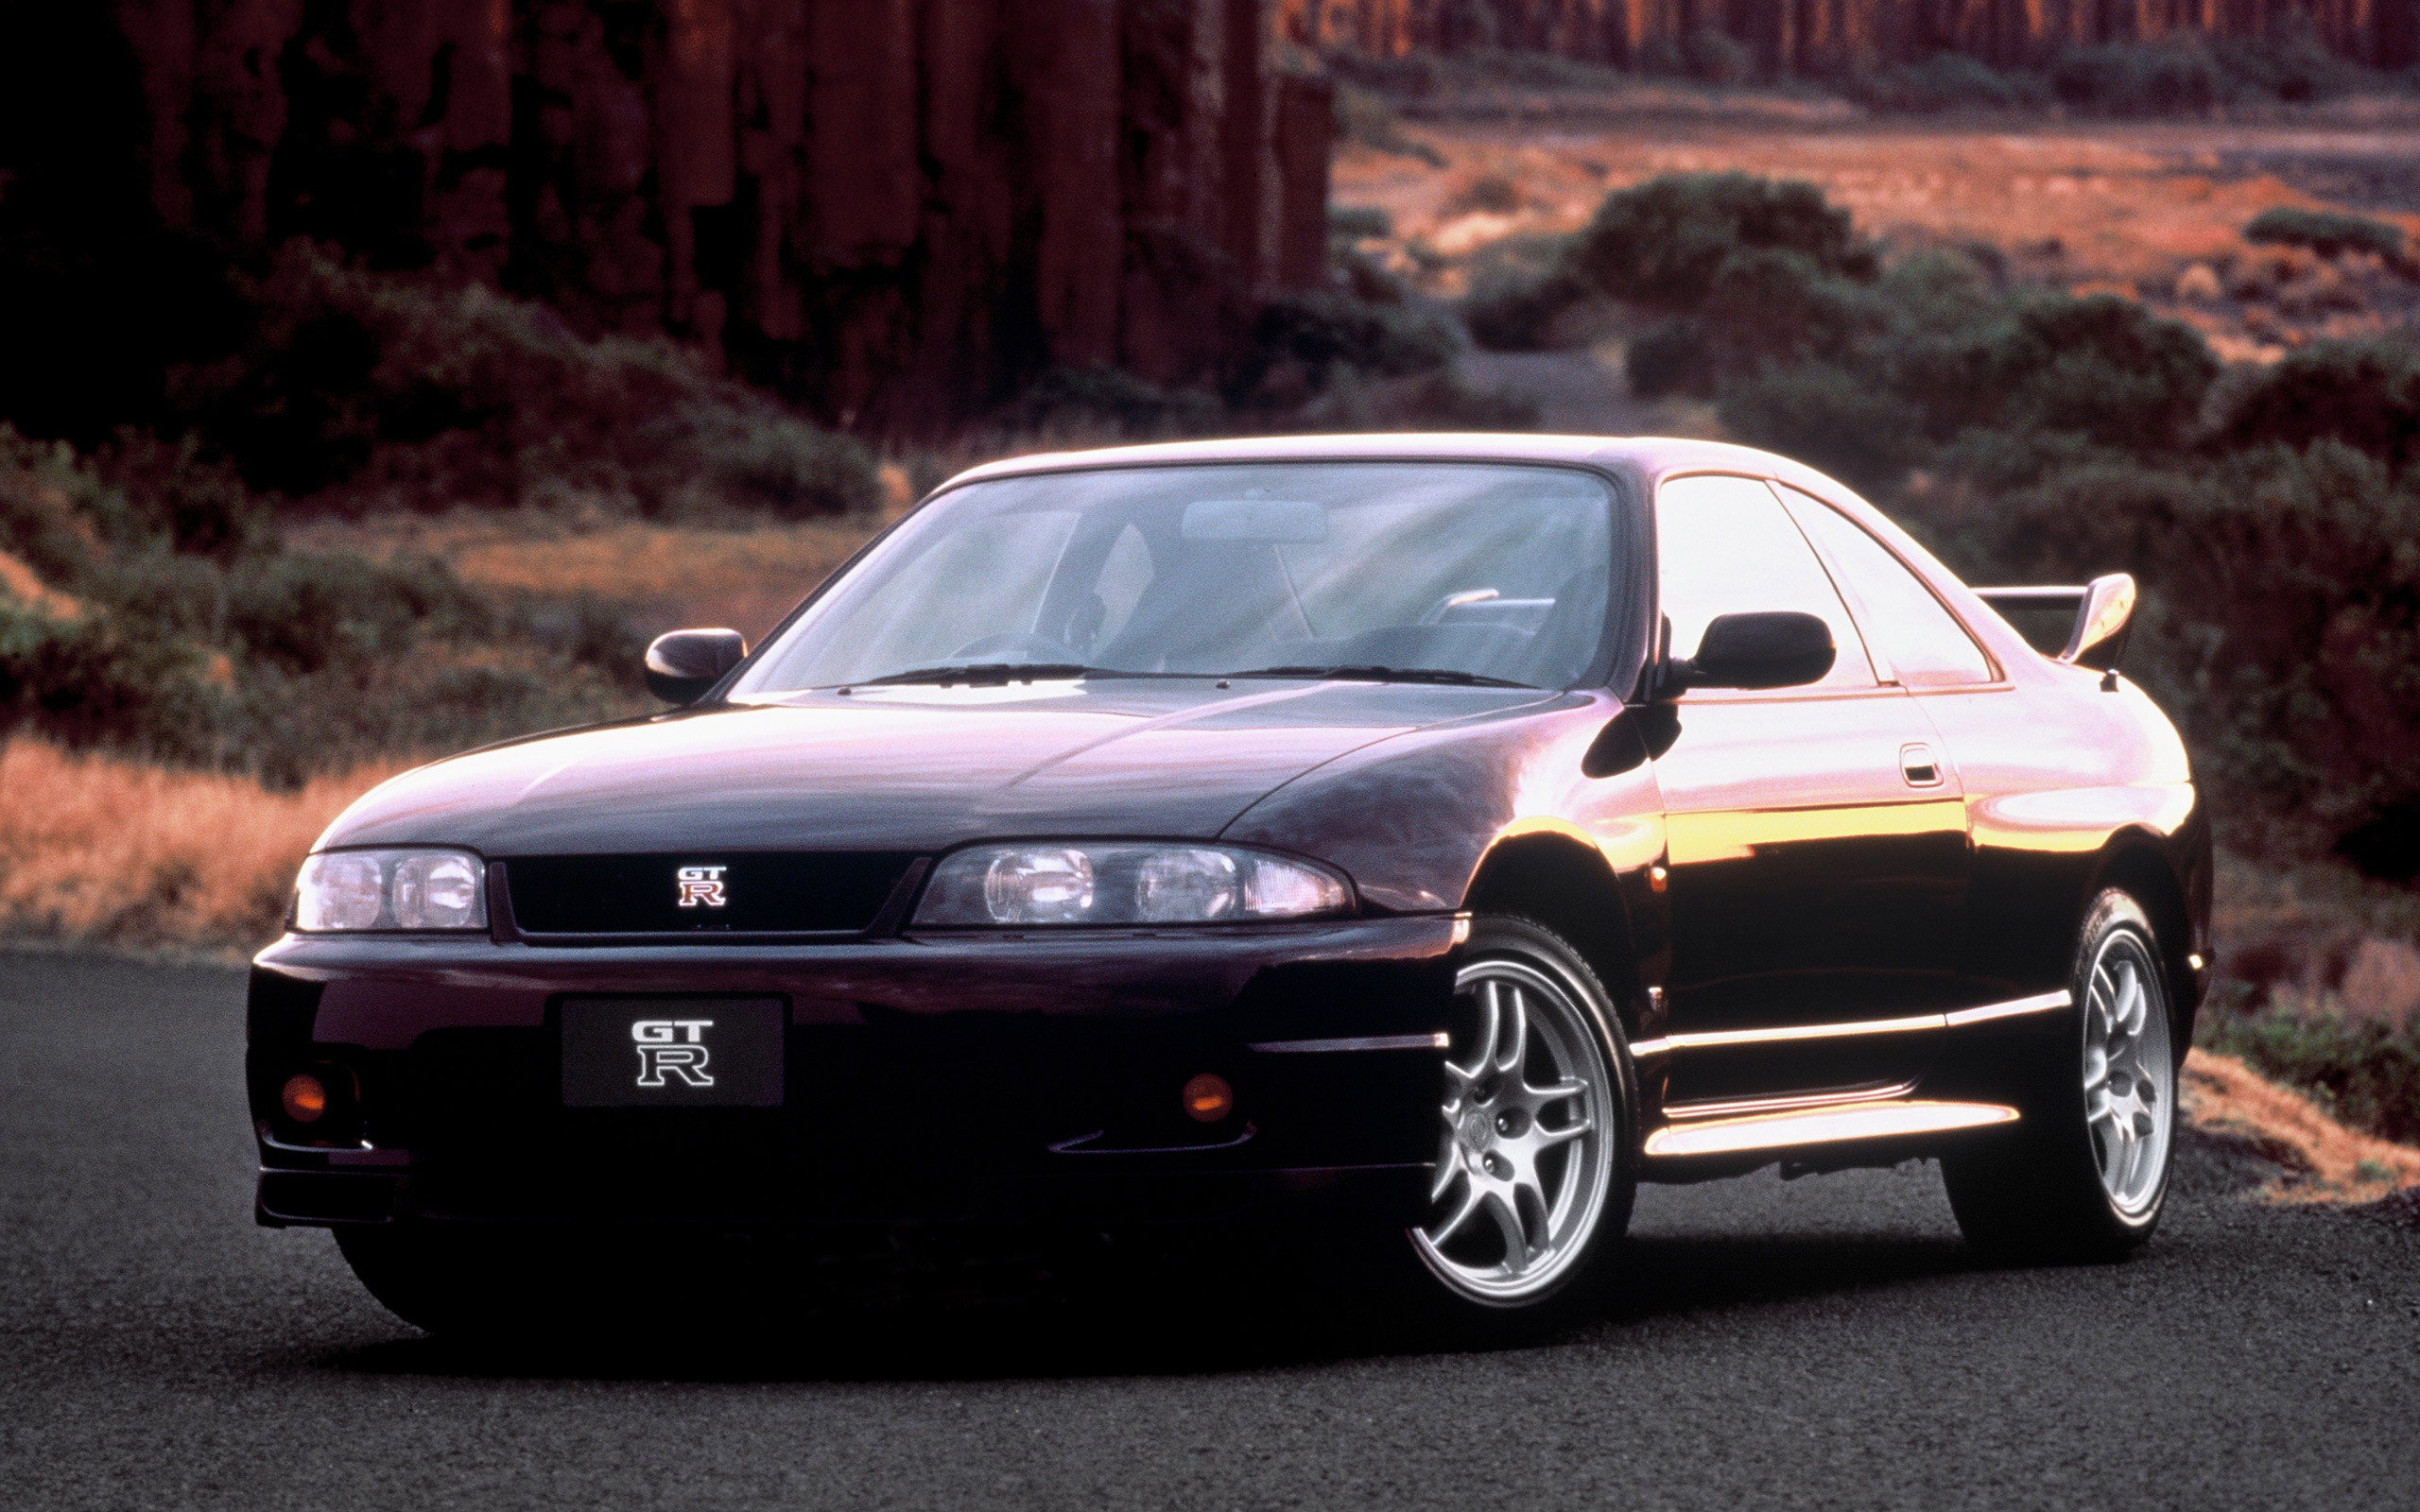  1995 Nissan Skyline GT-R Wallpaper.